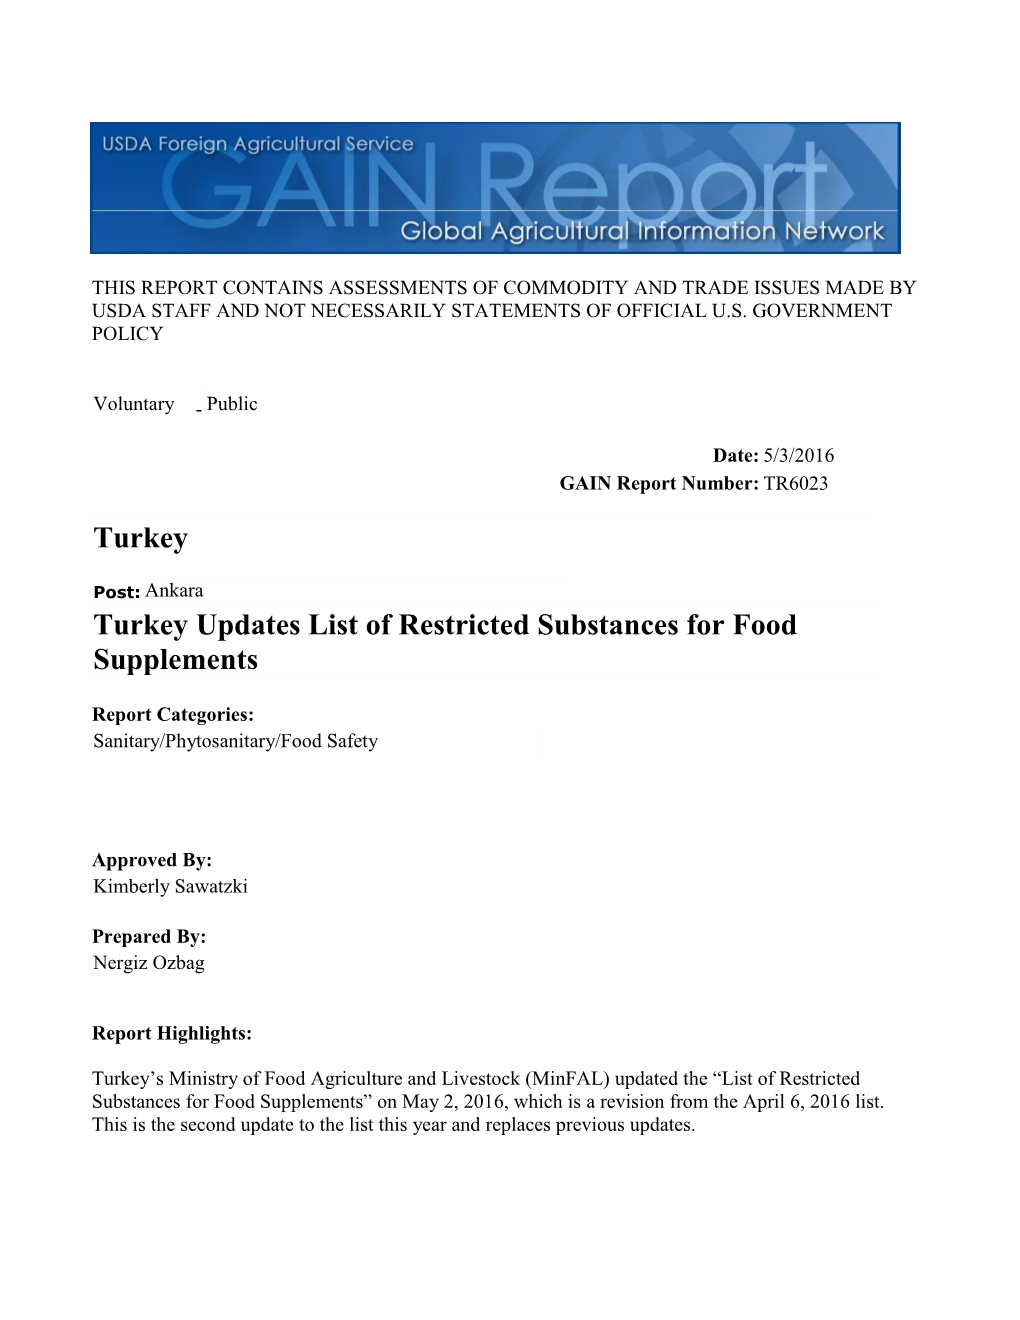 Turkey Updates List of Restricted Substances for Food